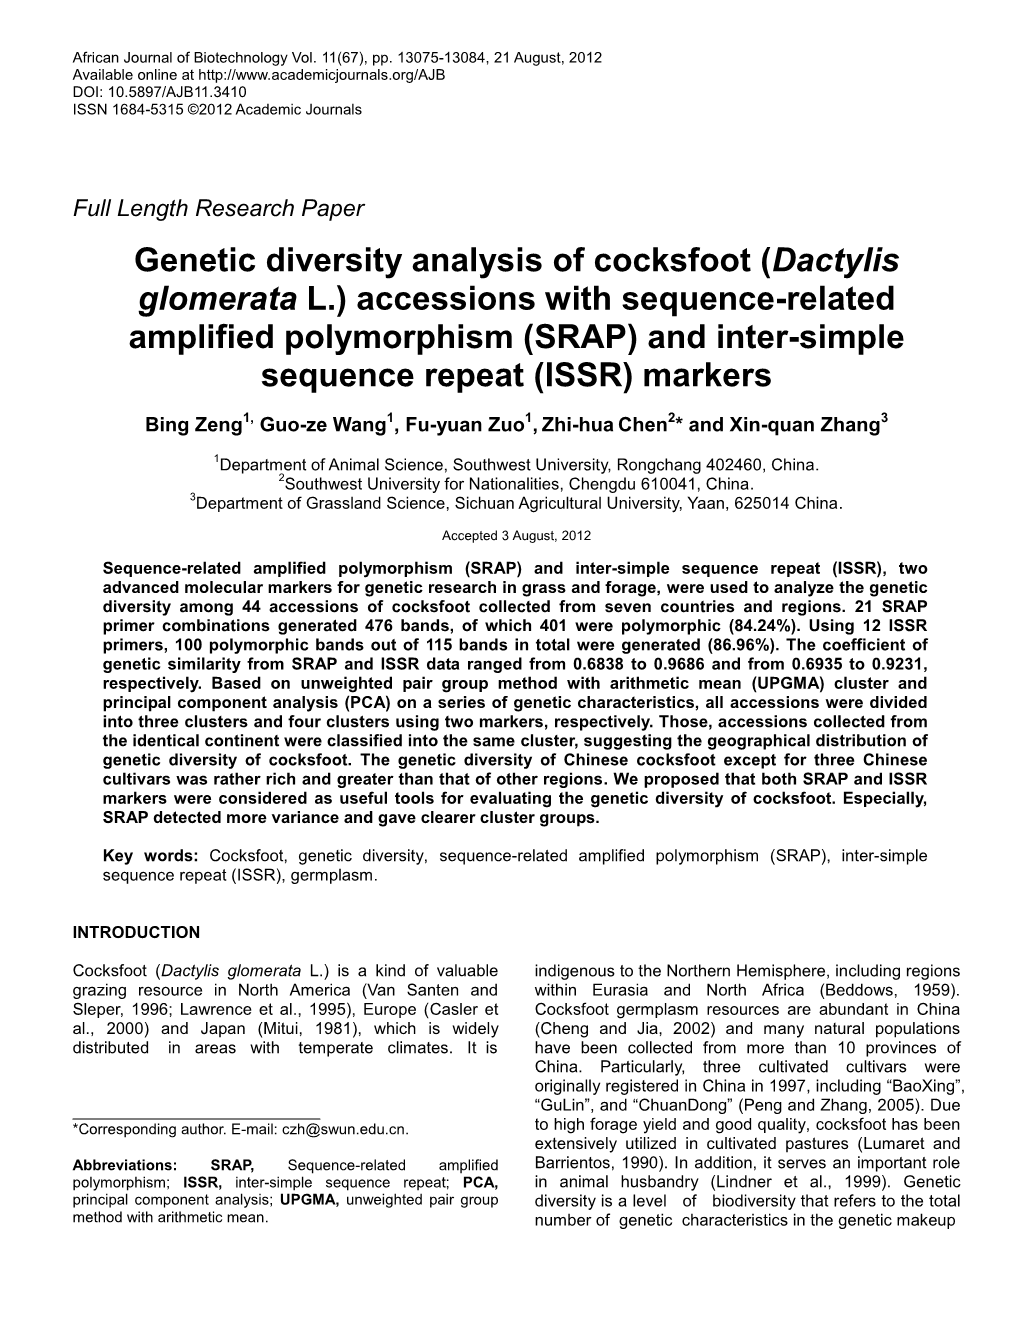 Genetic Diversity Analysis of Cocksfoot